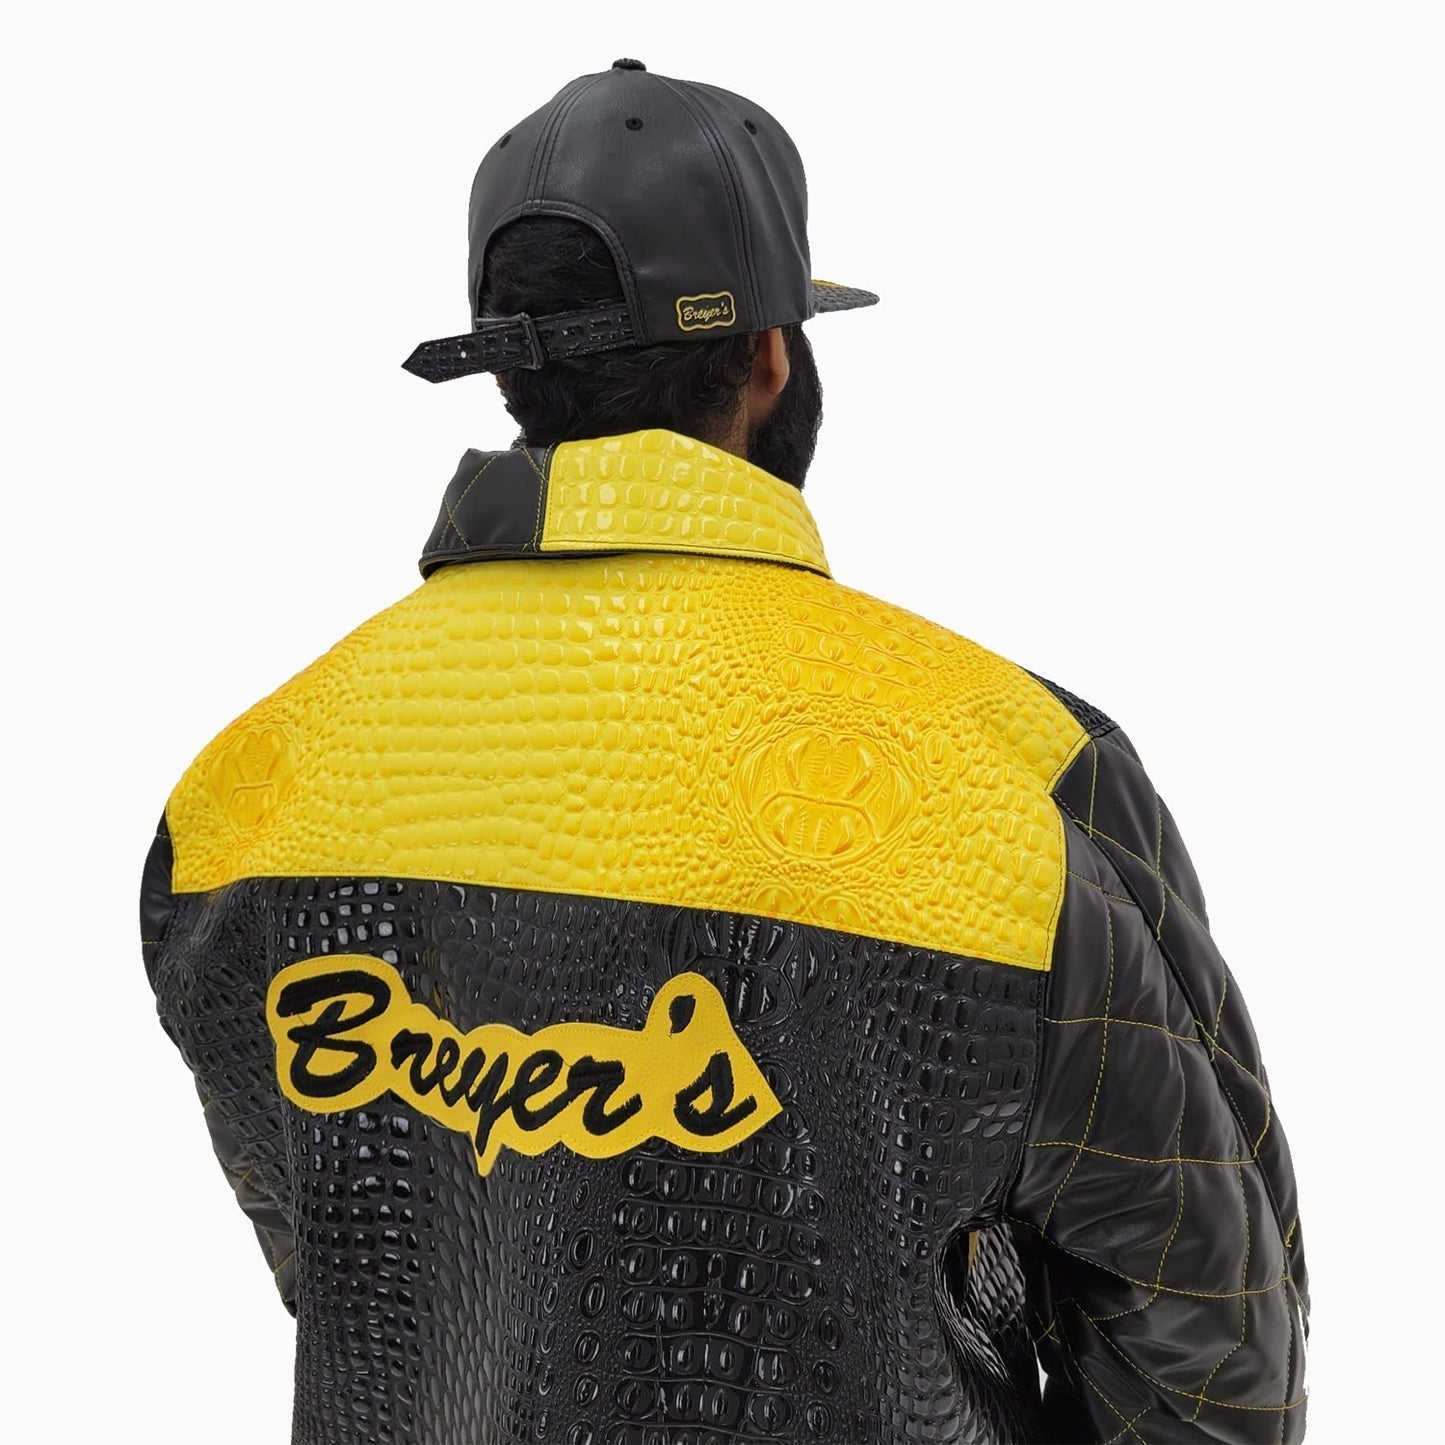 Breyer's Black Edition Leather Jacket